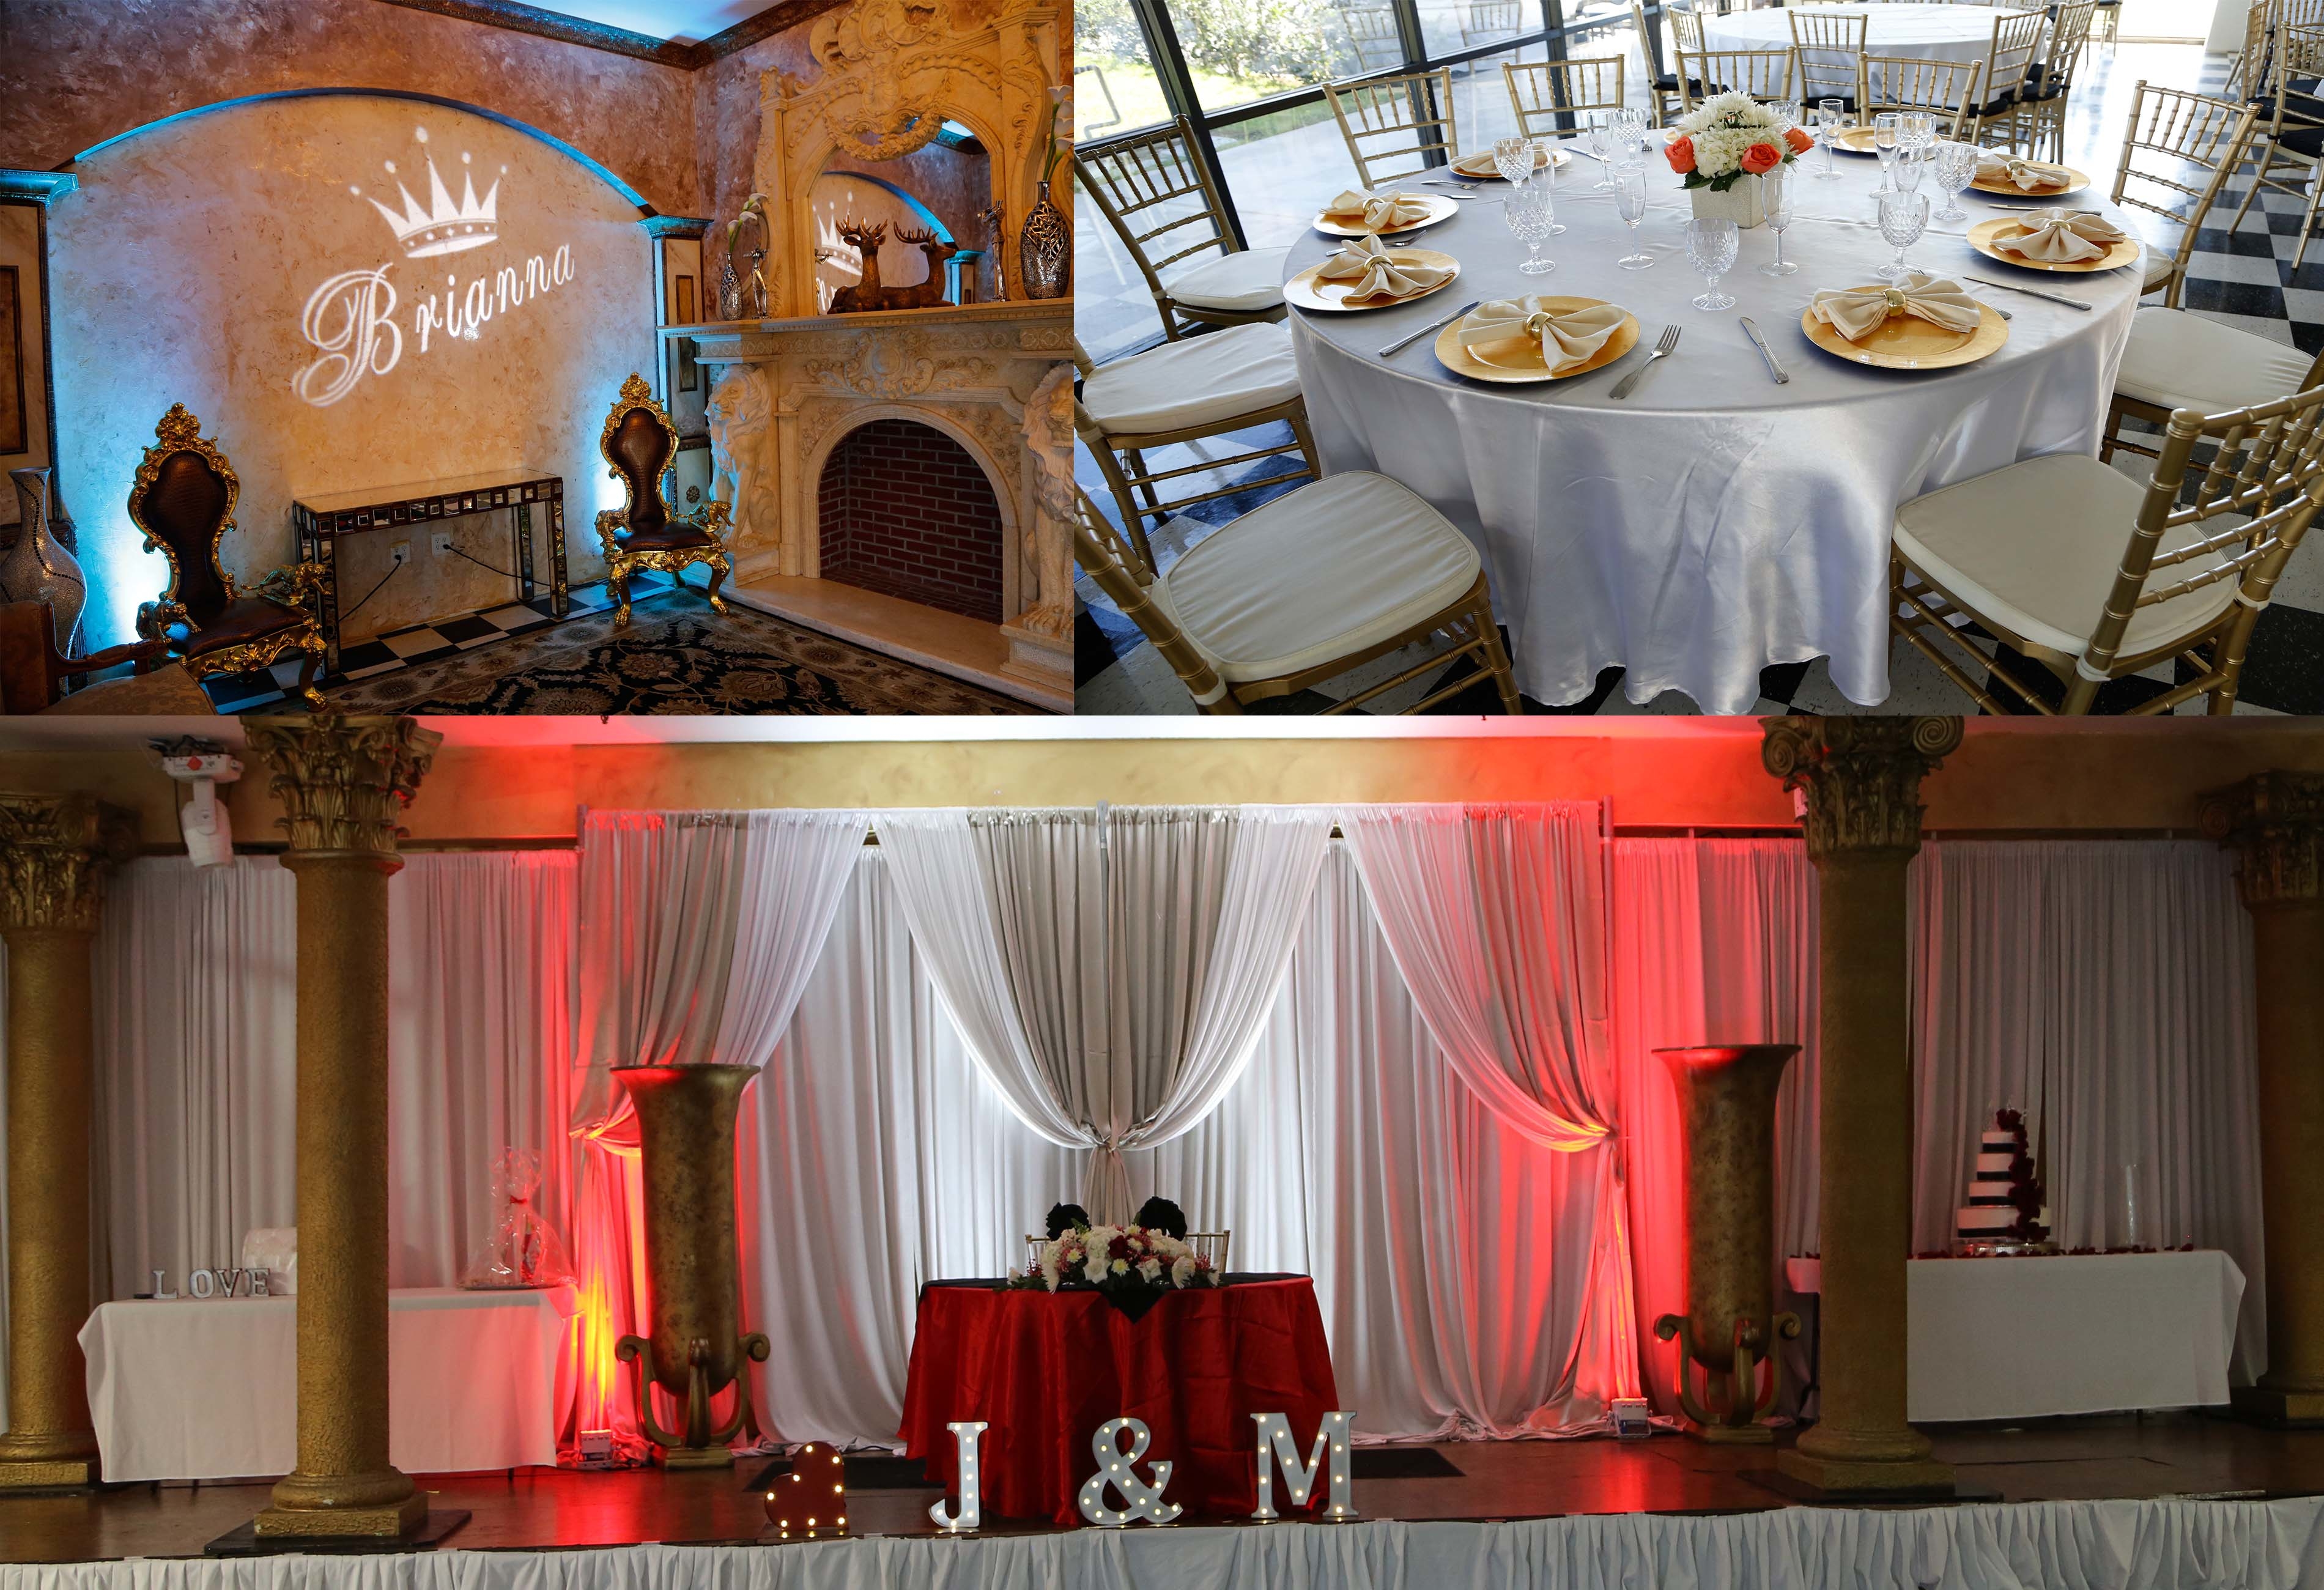 Salon Para Fiestas / Banquet Hall / The Place Banquet Hall Photo